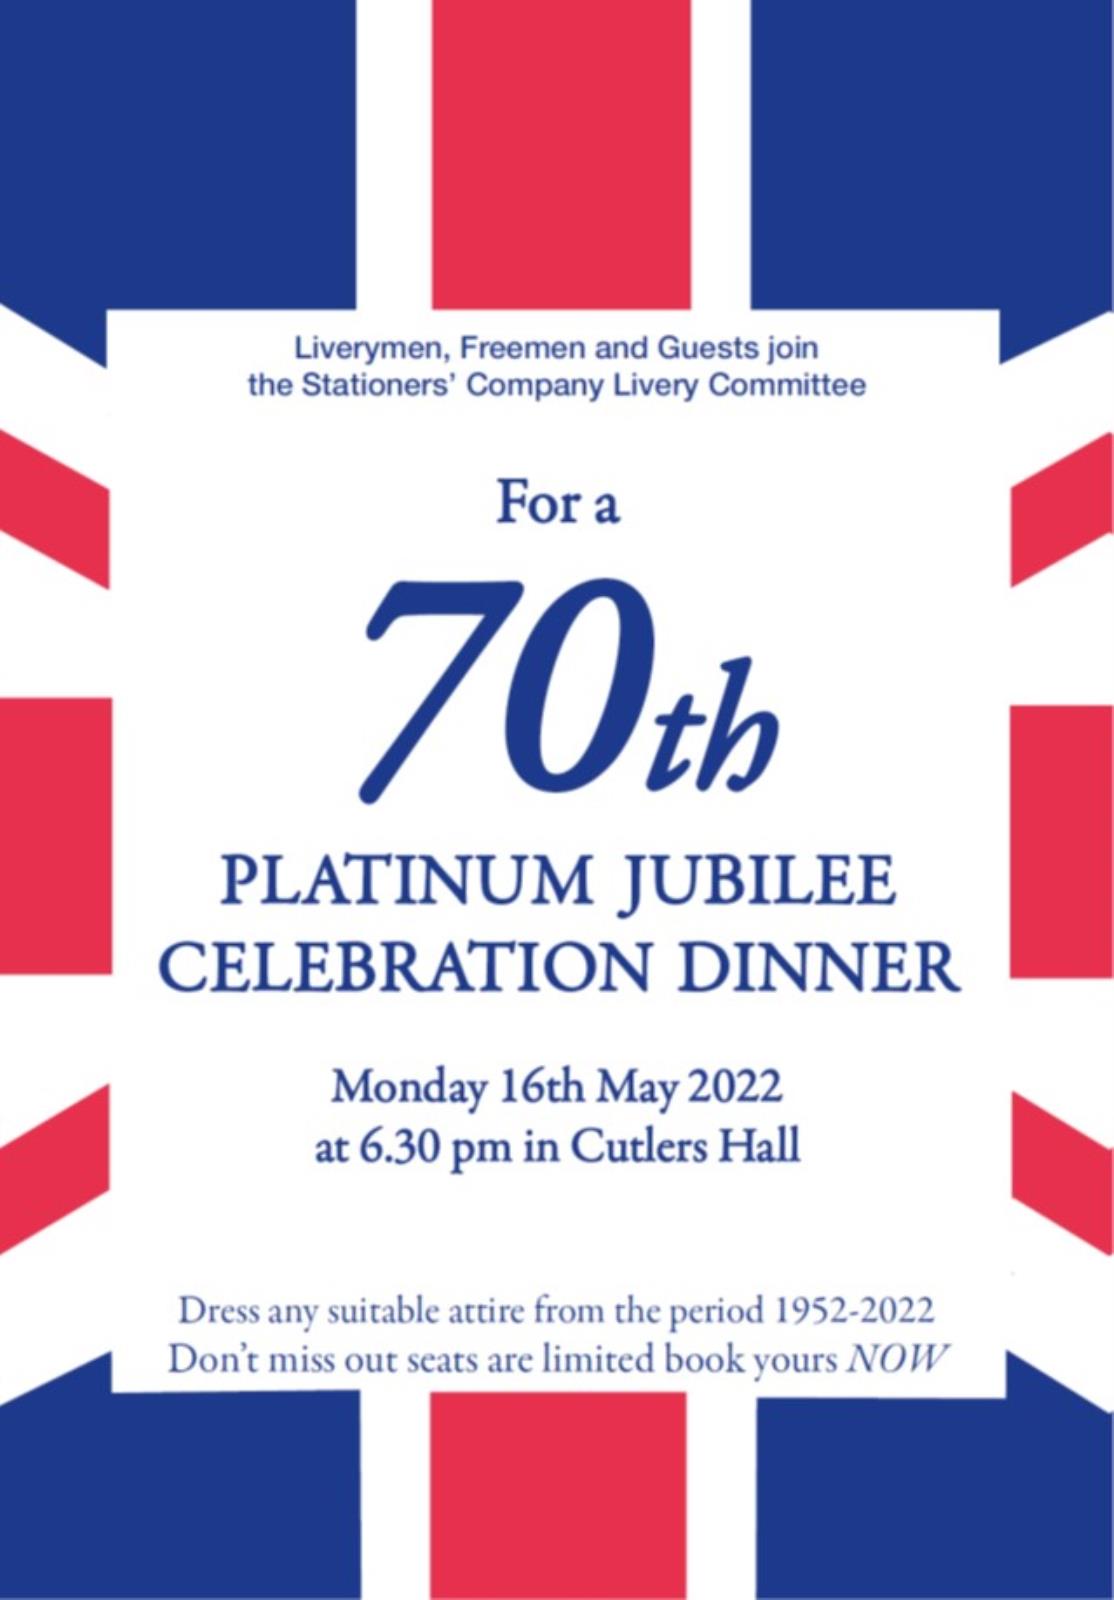 LivCom Spring Dinner- a celebration for the Queen's Platinum Jubilee